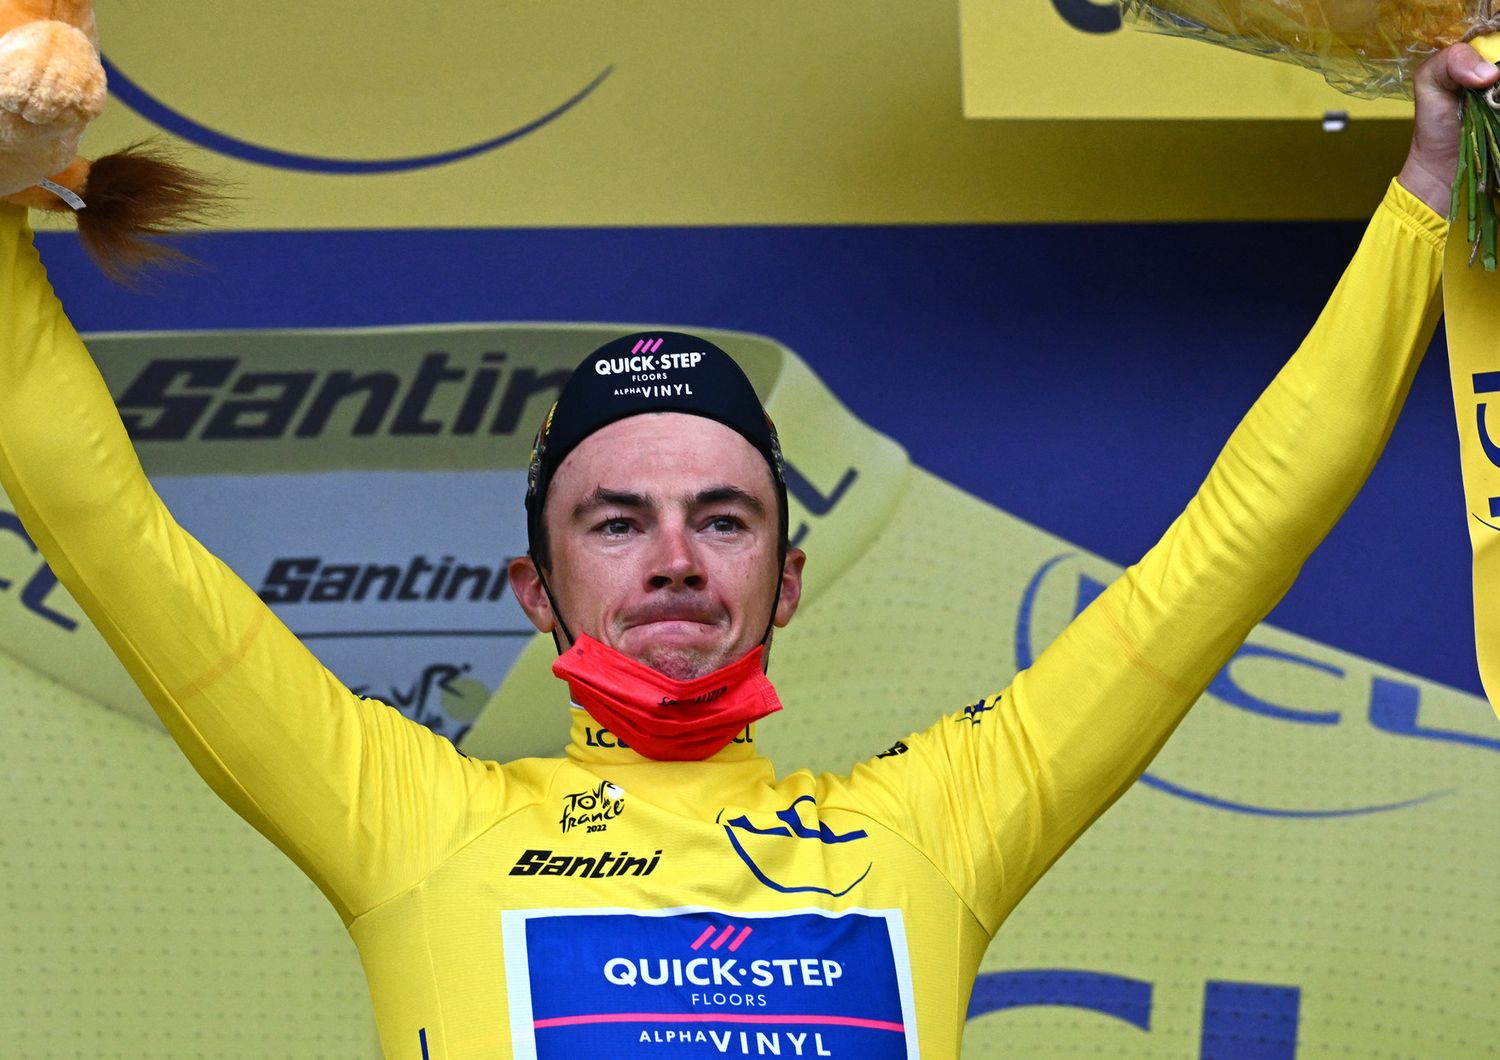 Yves Lampaert vince la prima tappa del&nbsp;Tour&nbsp;de France 2022, la cronometro di Copenhagen